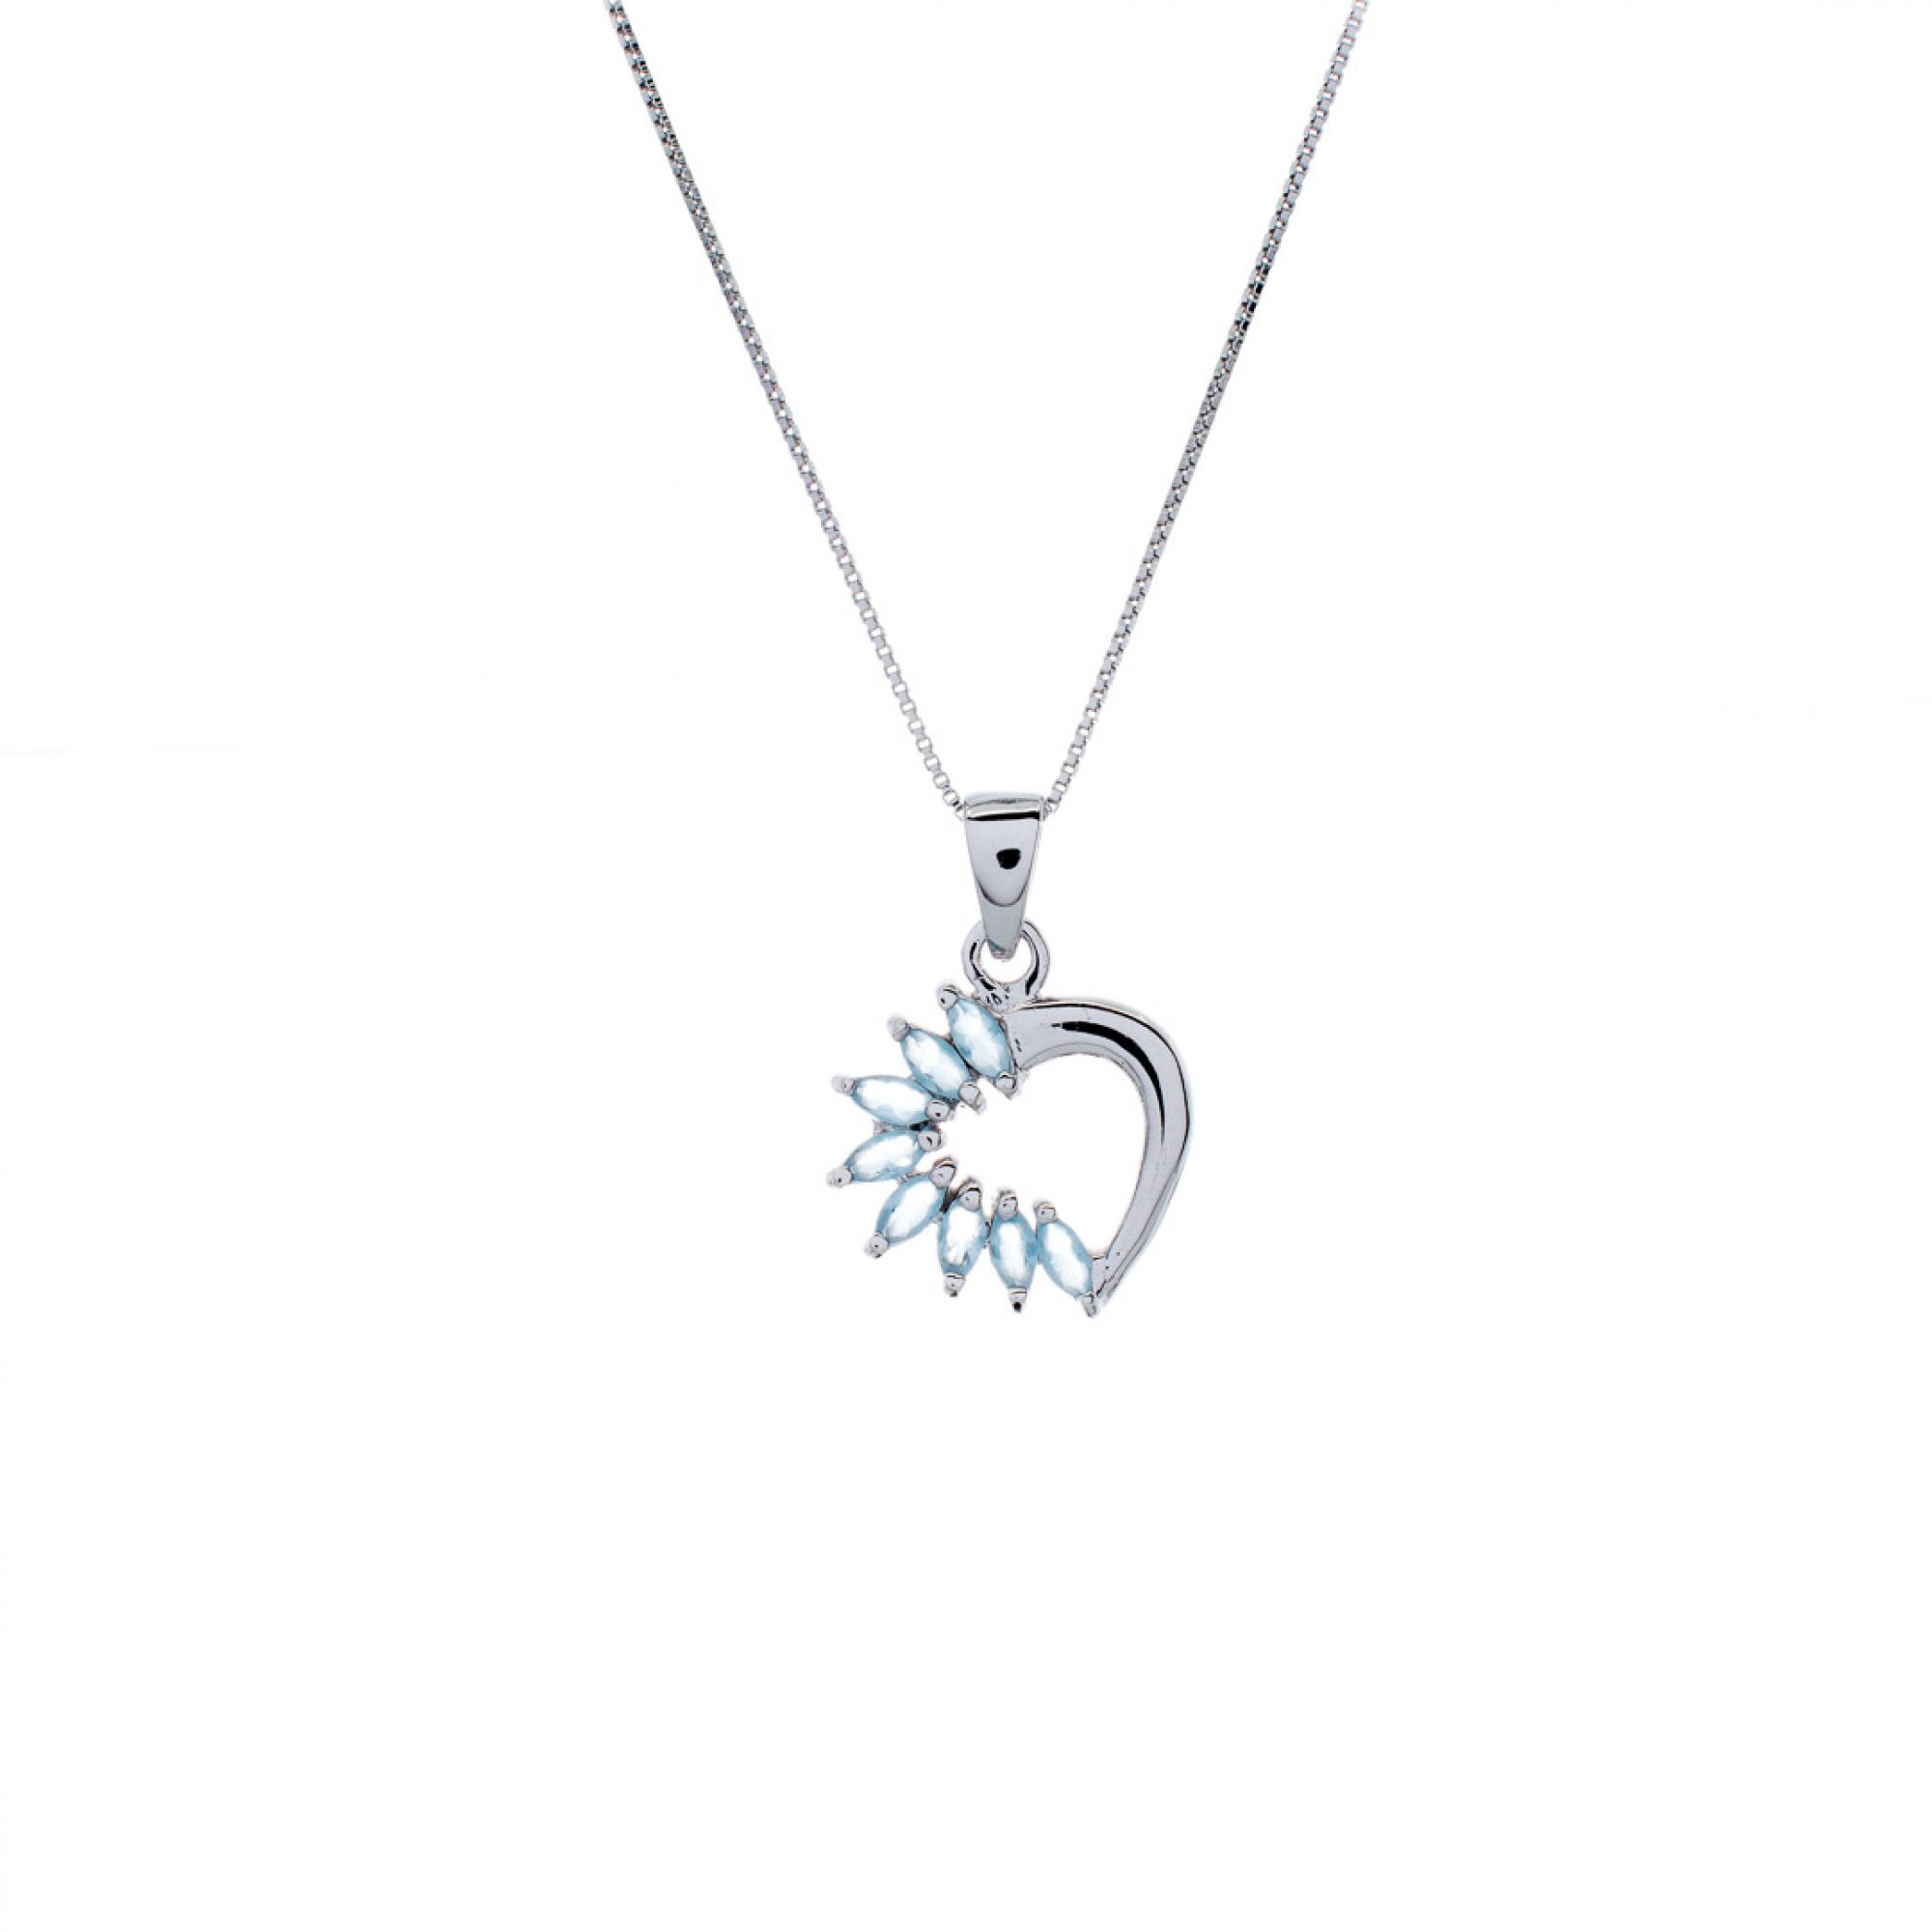 Heart necklace with aqua marine stones